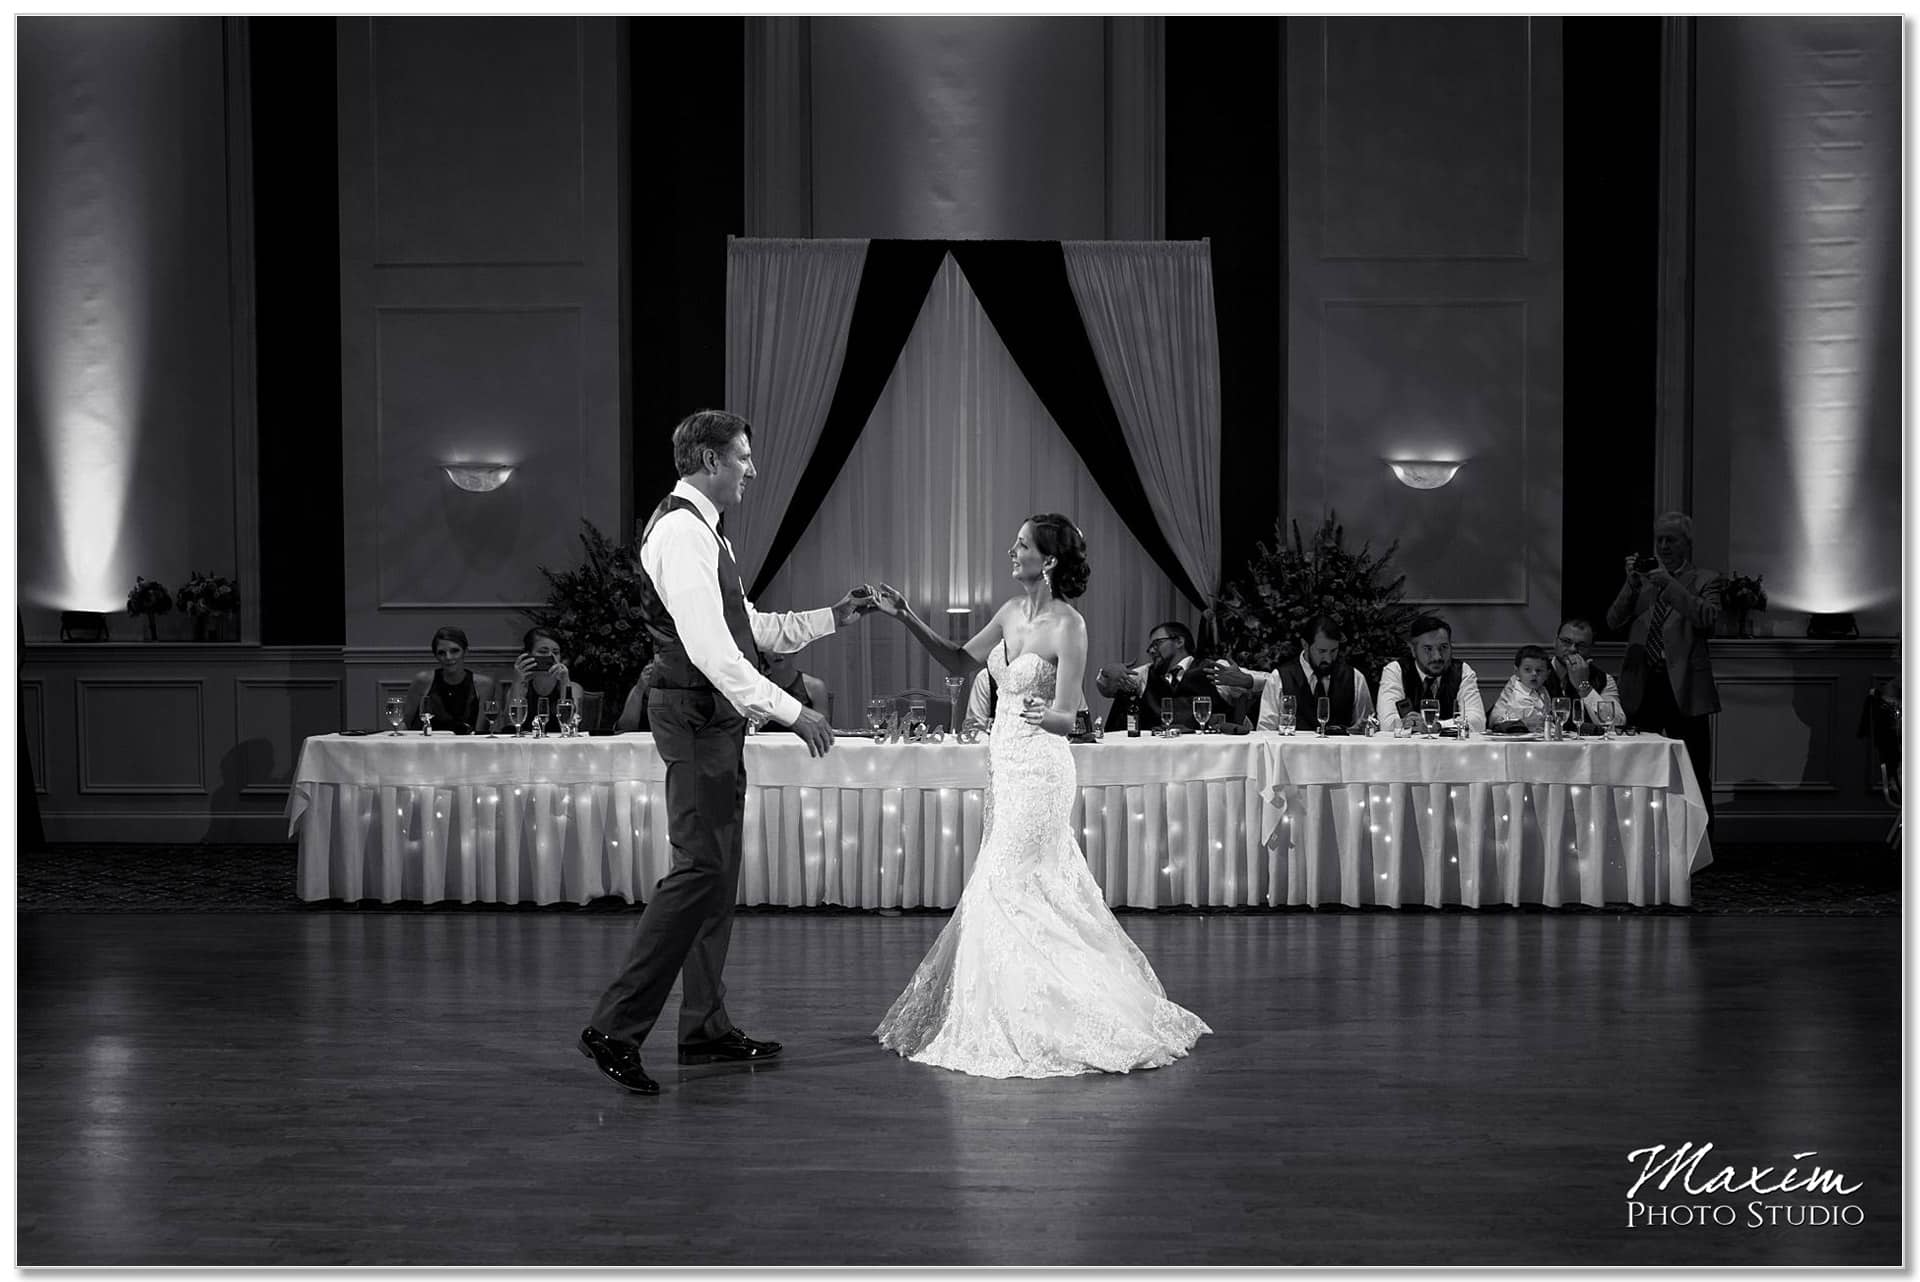 The Grand Ballroom Covington KY wedding reception